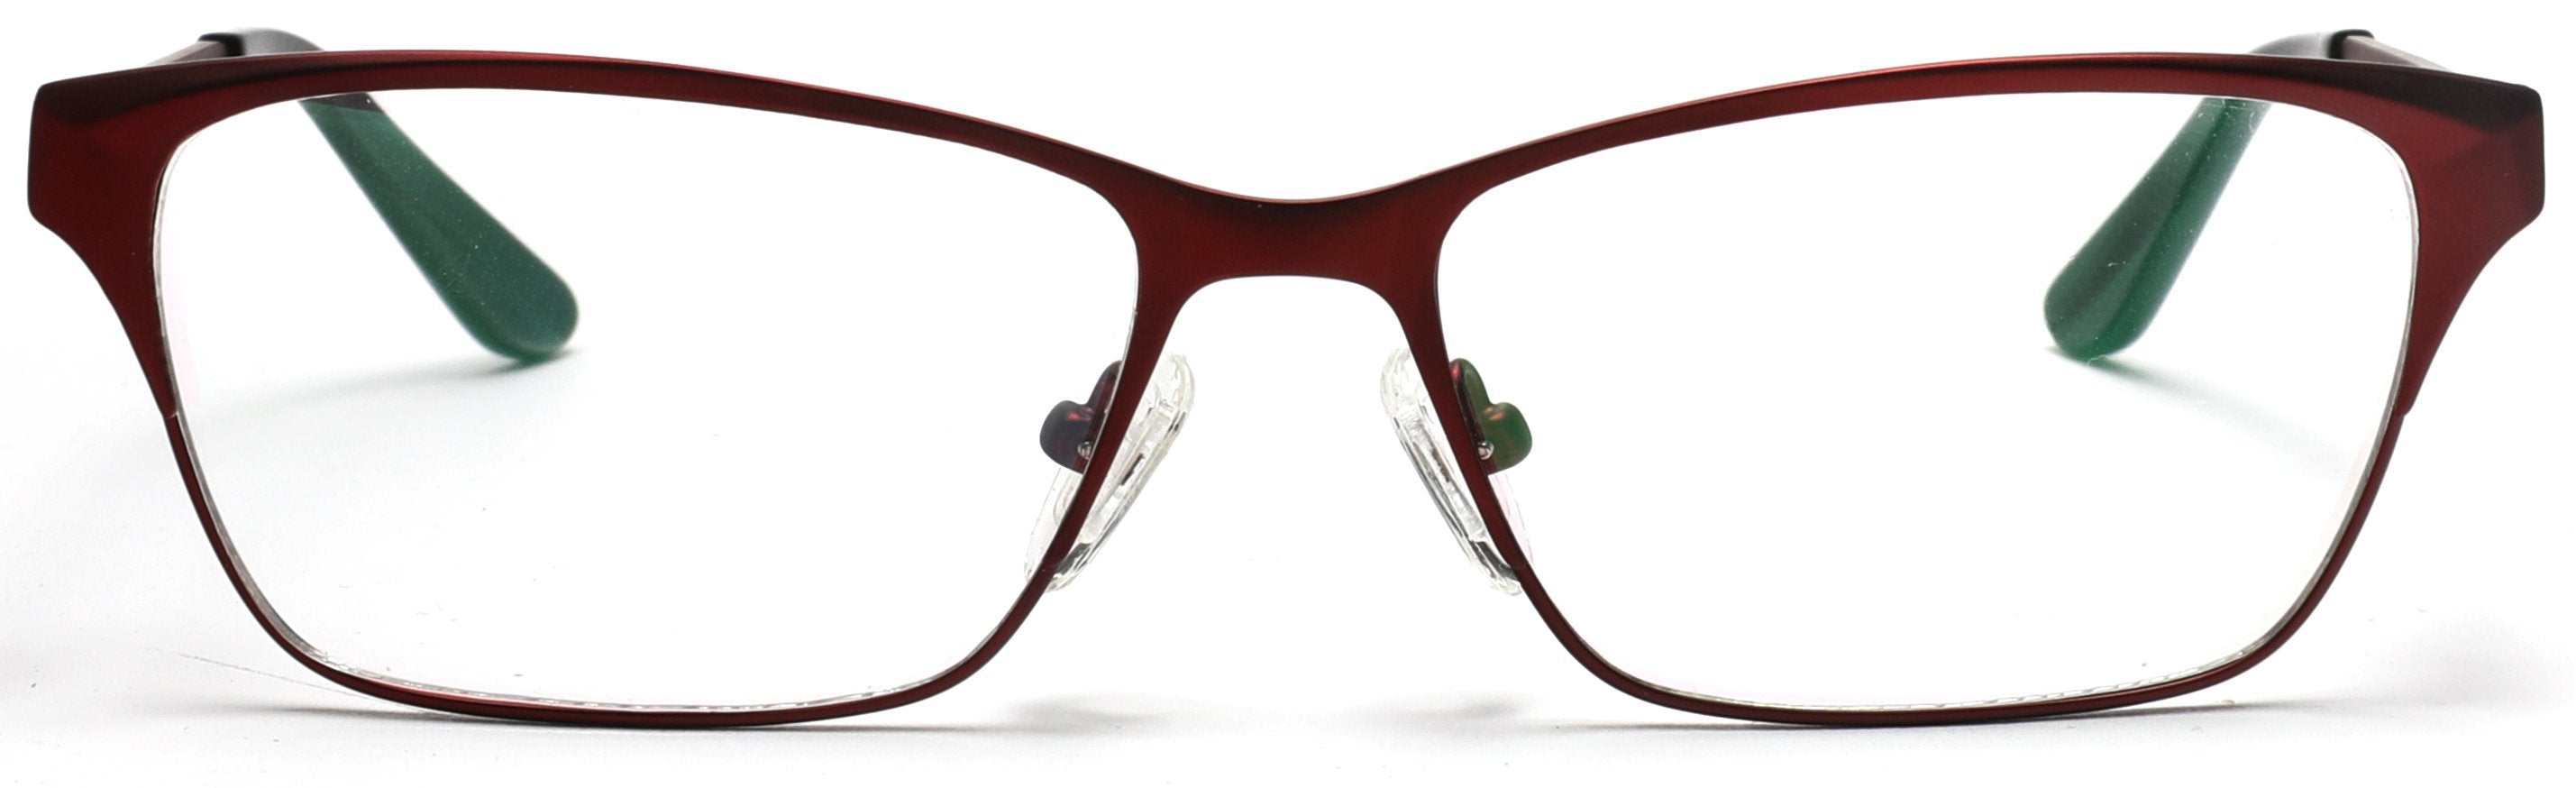 Tango Optics Browline Metal Eyeglasses Frame Luxe RX Stainless Steel Mary Sherman Morgan Blue For Prescription Lens-Samba Shades